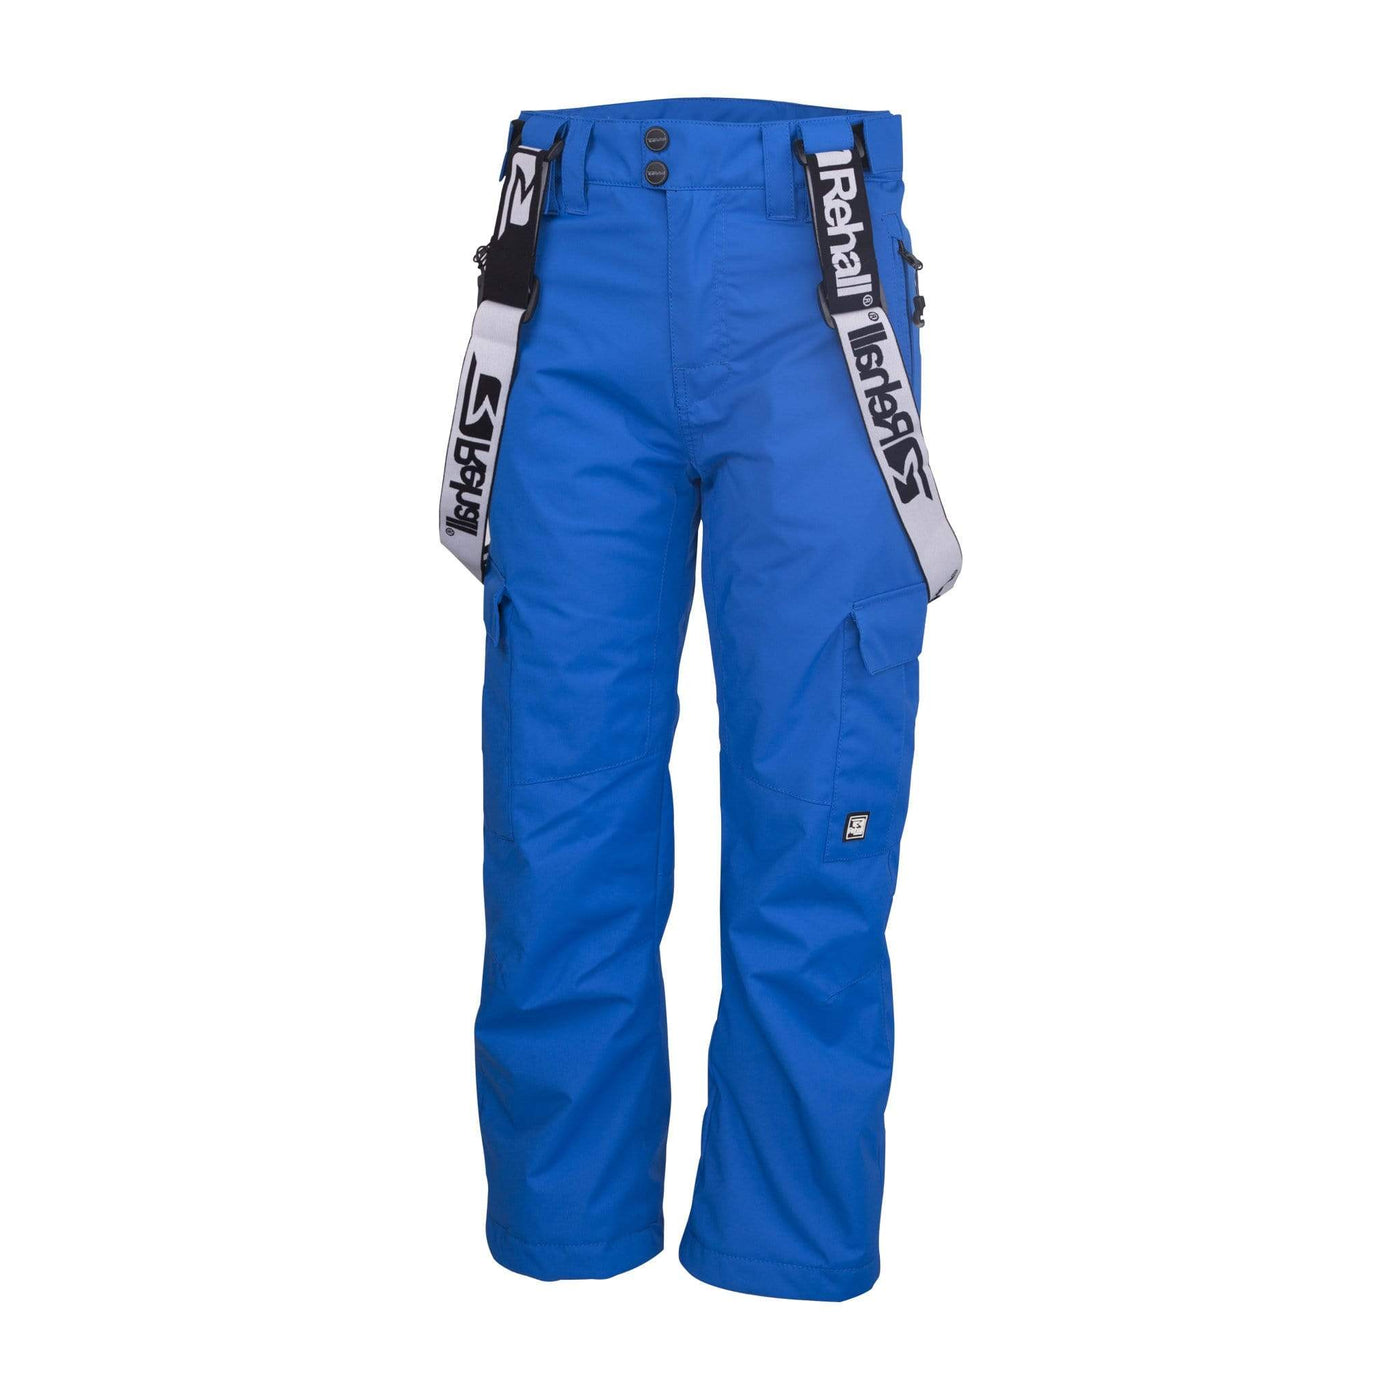 SnowKids Outerwear Pants 128 Rehall Dizzy Jr Boys Snow Pant - Reflex Blue